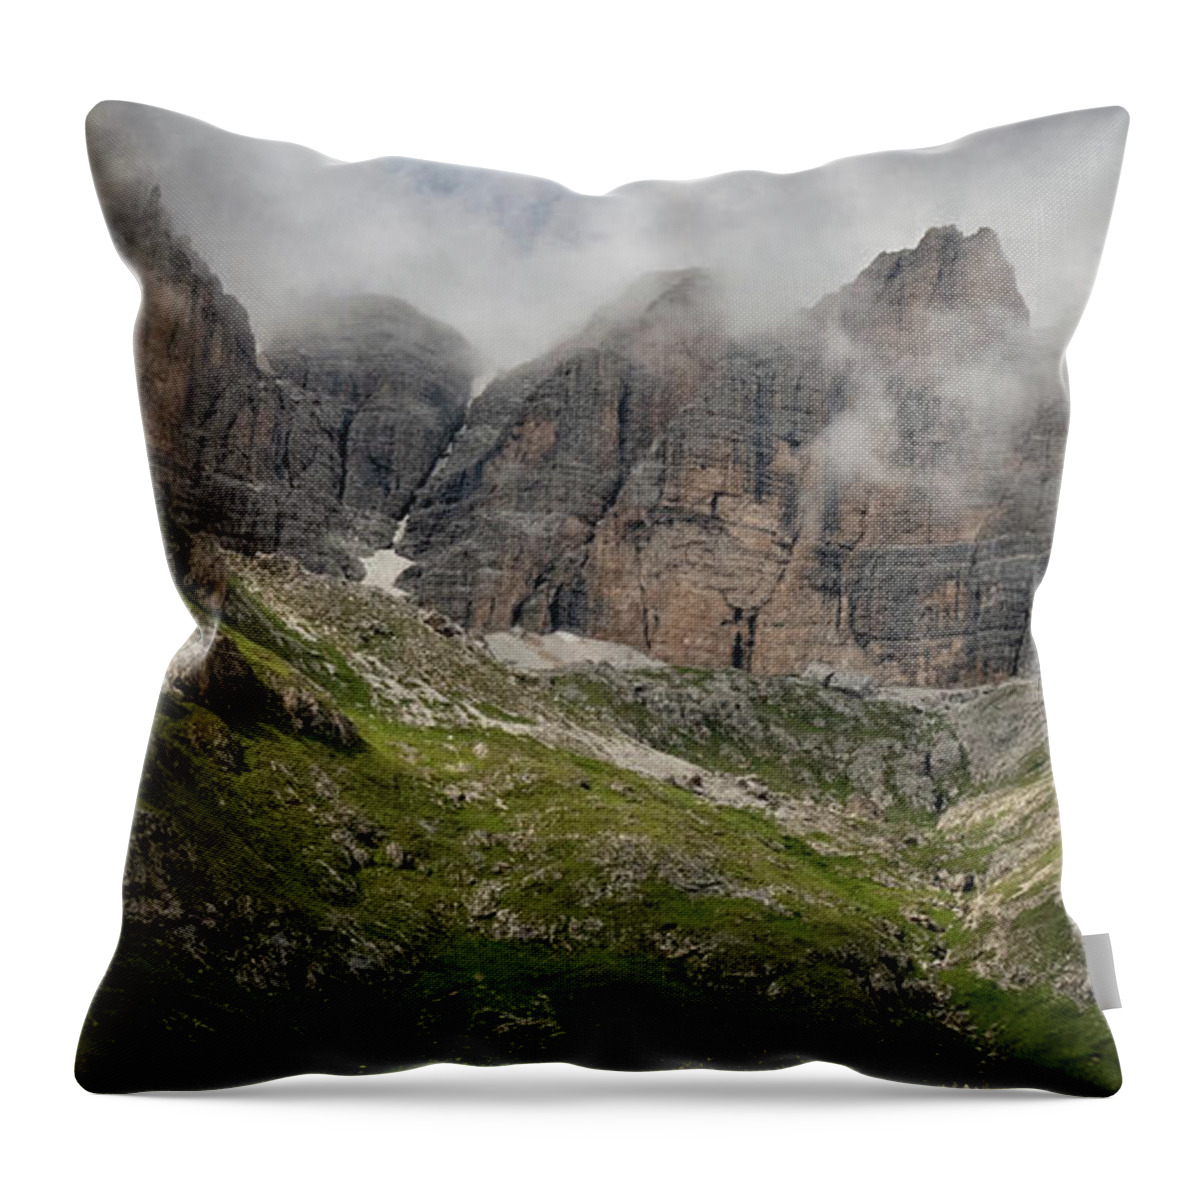 2018 Throw Pillow featuring the photograph Dolomites 7120239 by Deidre Elzer-Lento